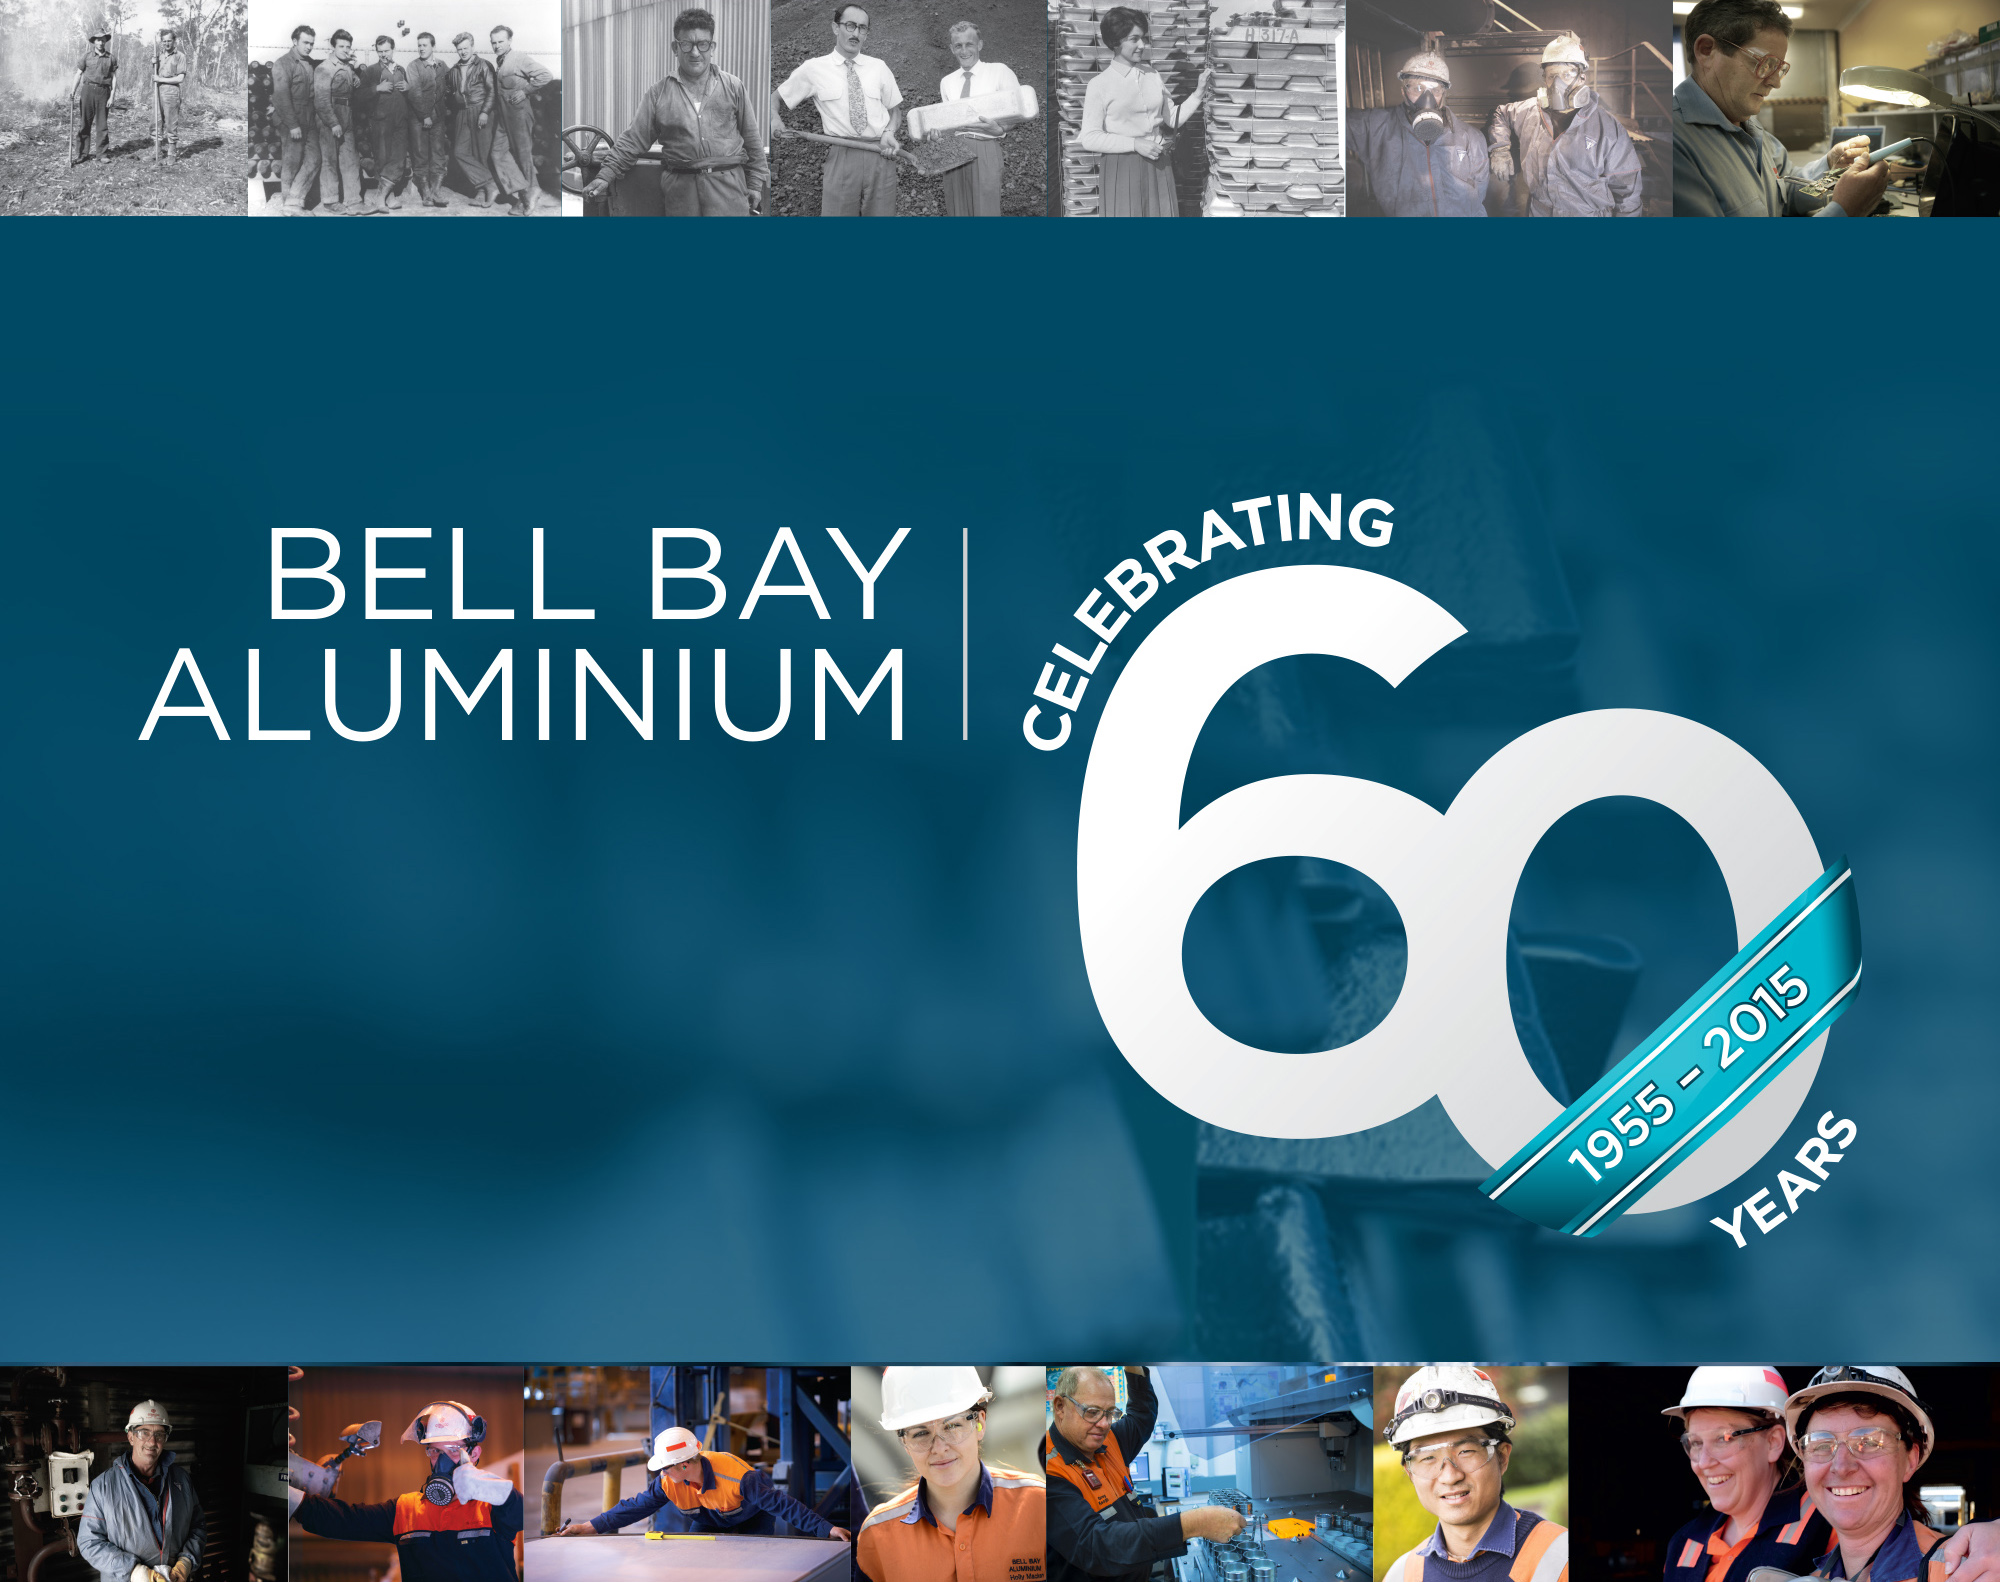 Bell Bay Aluminium 60th birthday